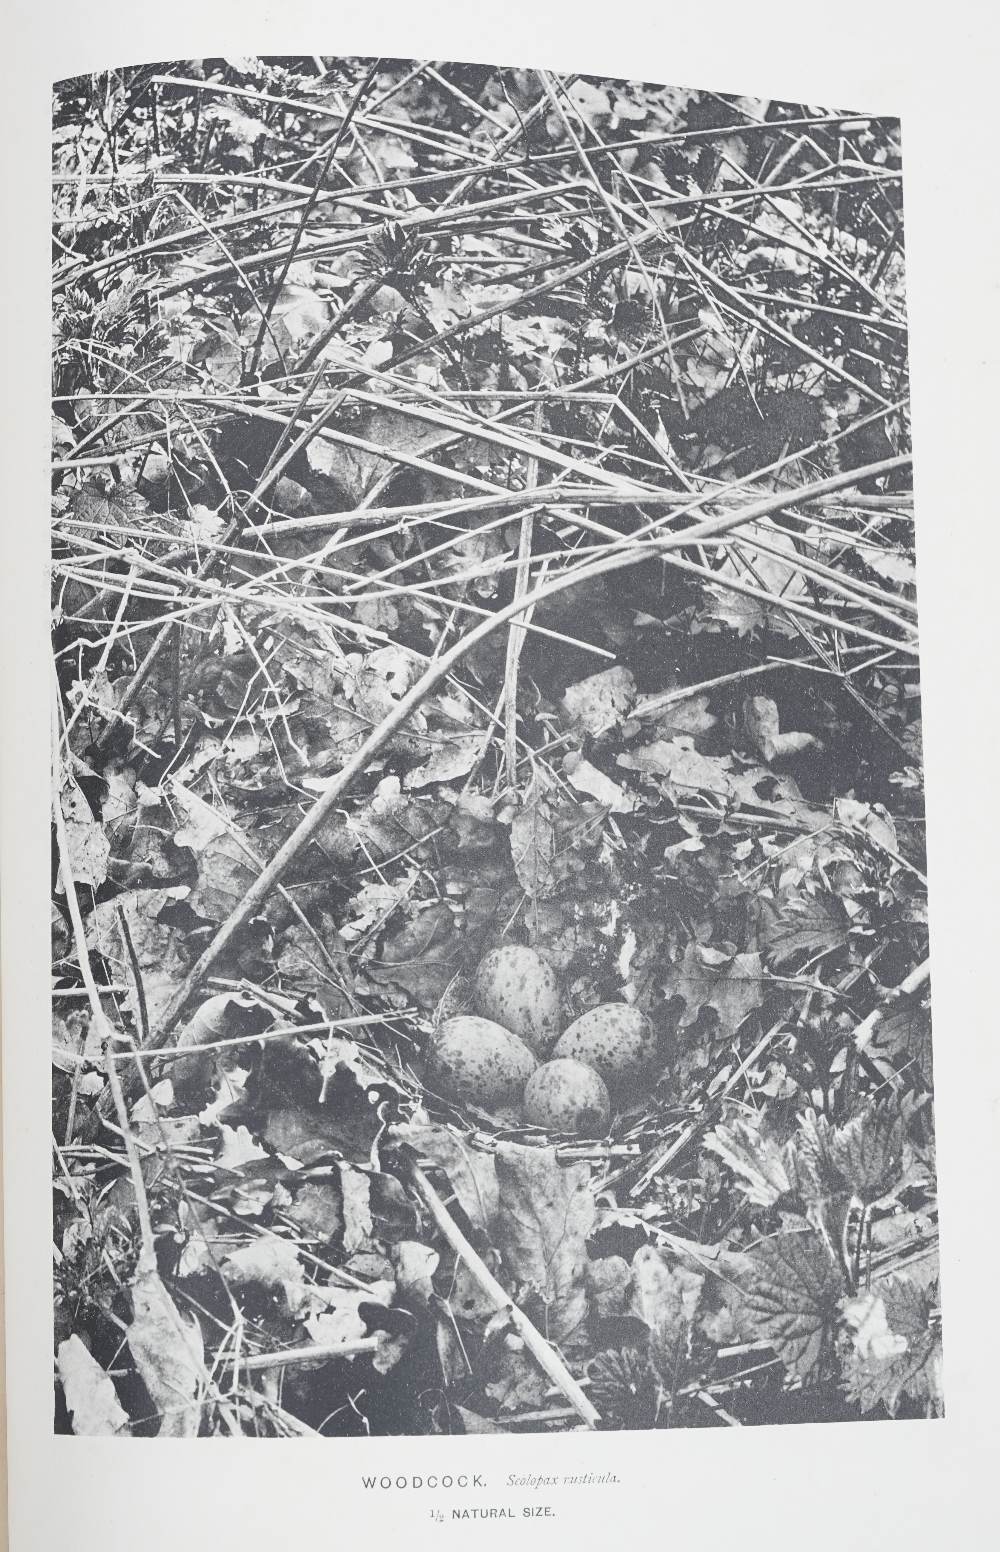 LEE, Oswin A. J. Among British Birds in their Nesting Haunts. Edinburgh: David Douglas, [1896-]99. - Image 4 of 4